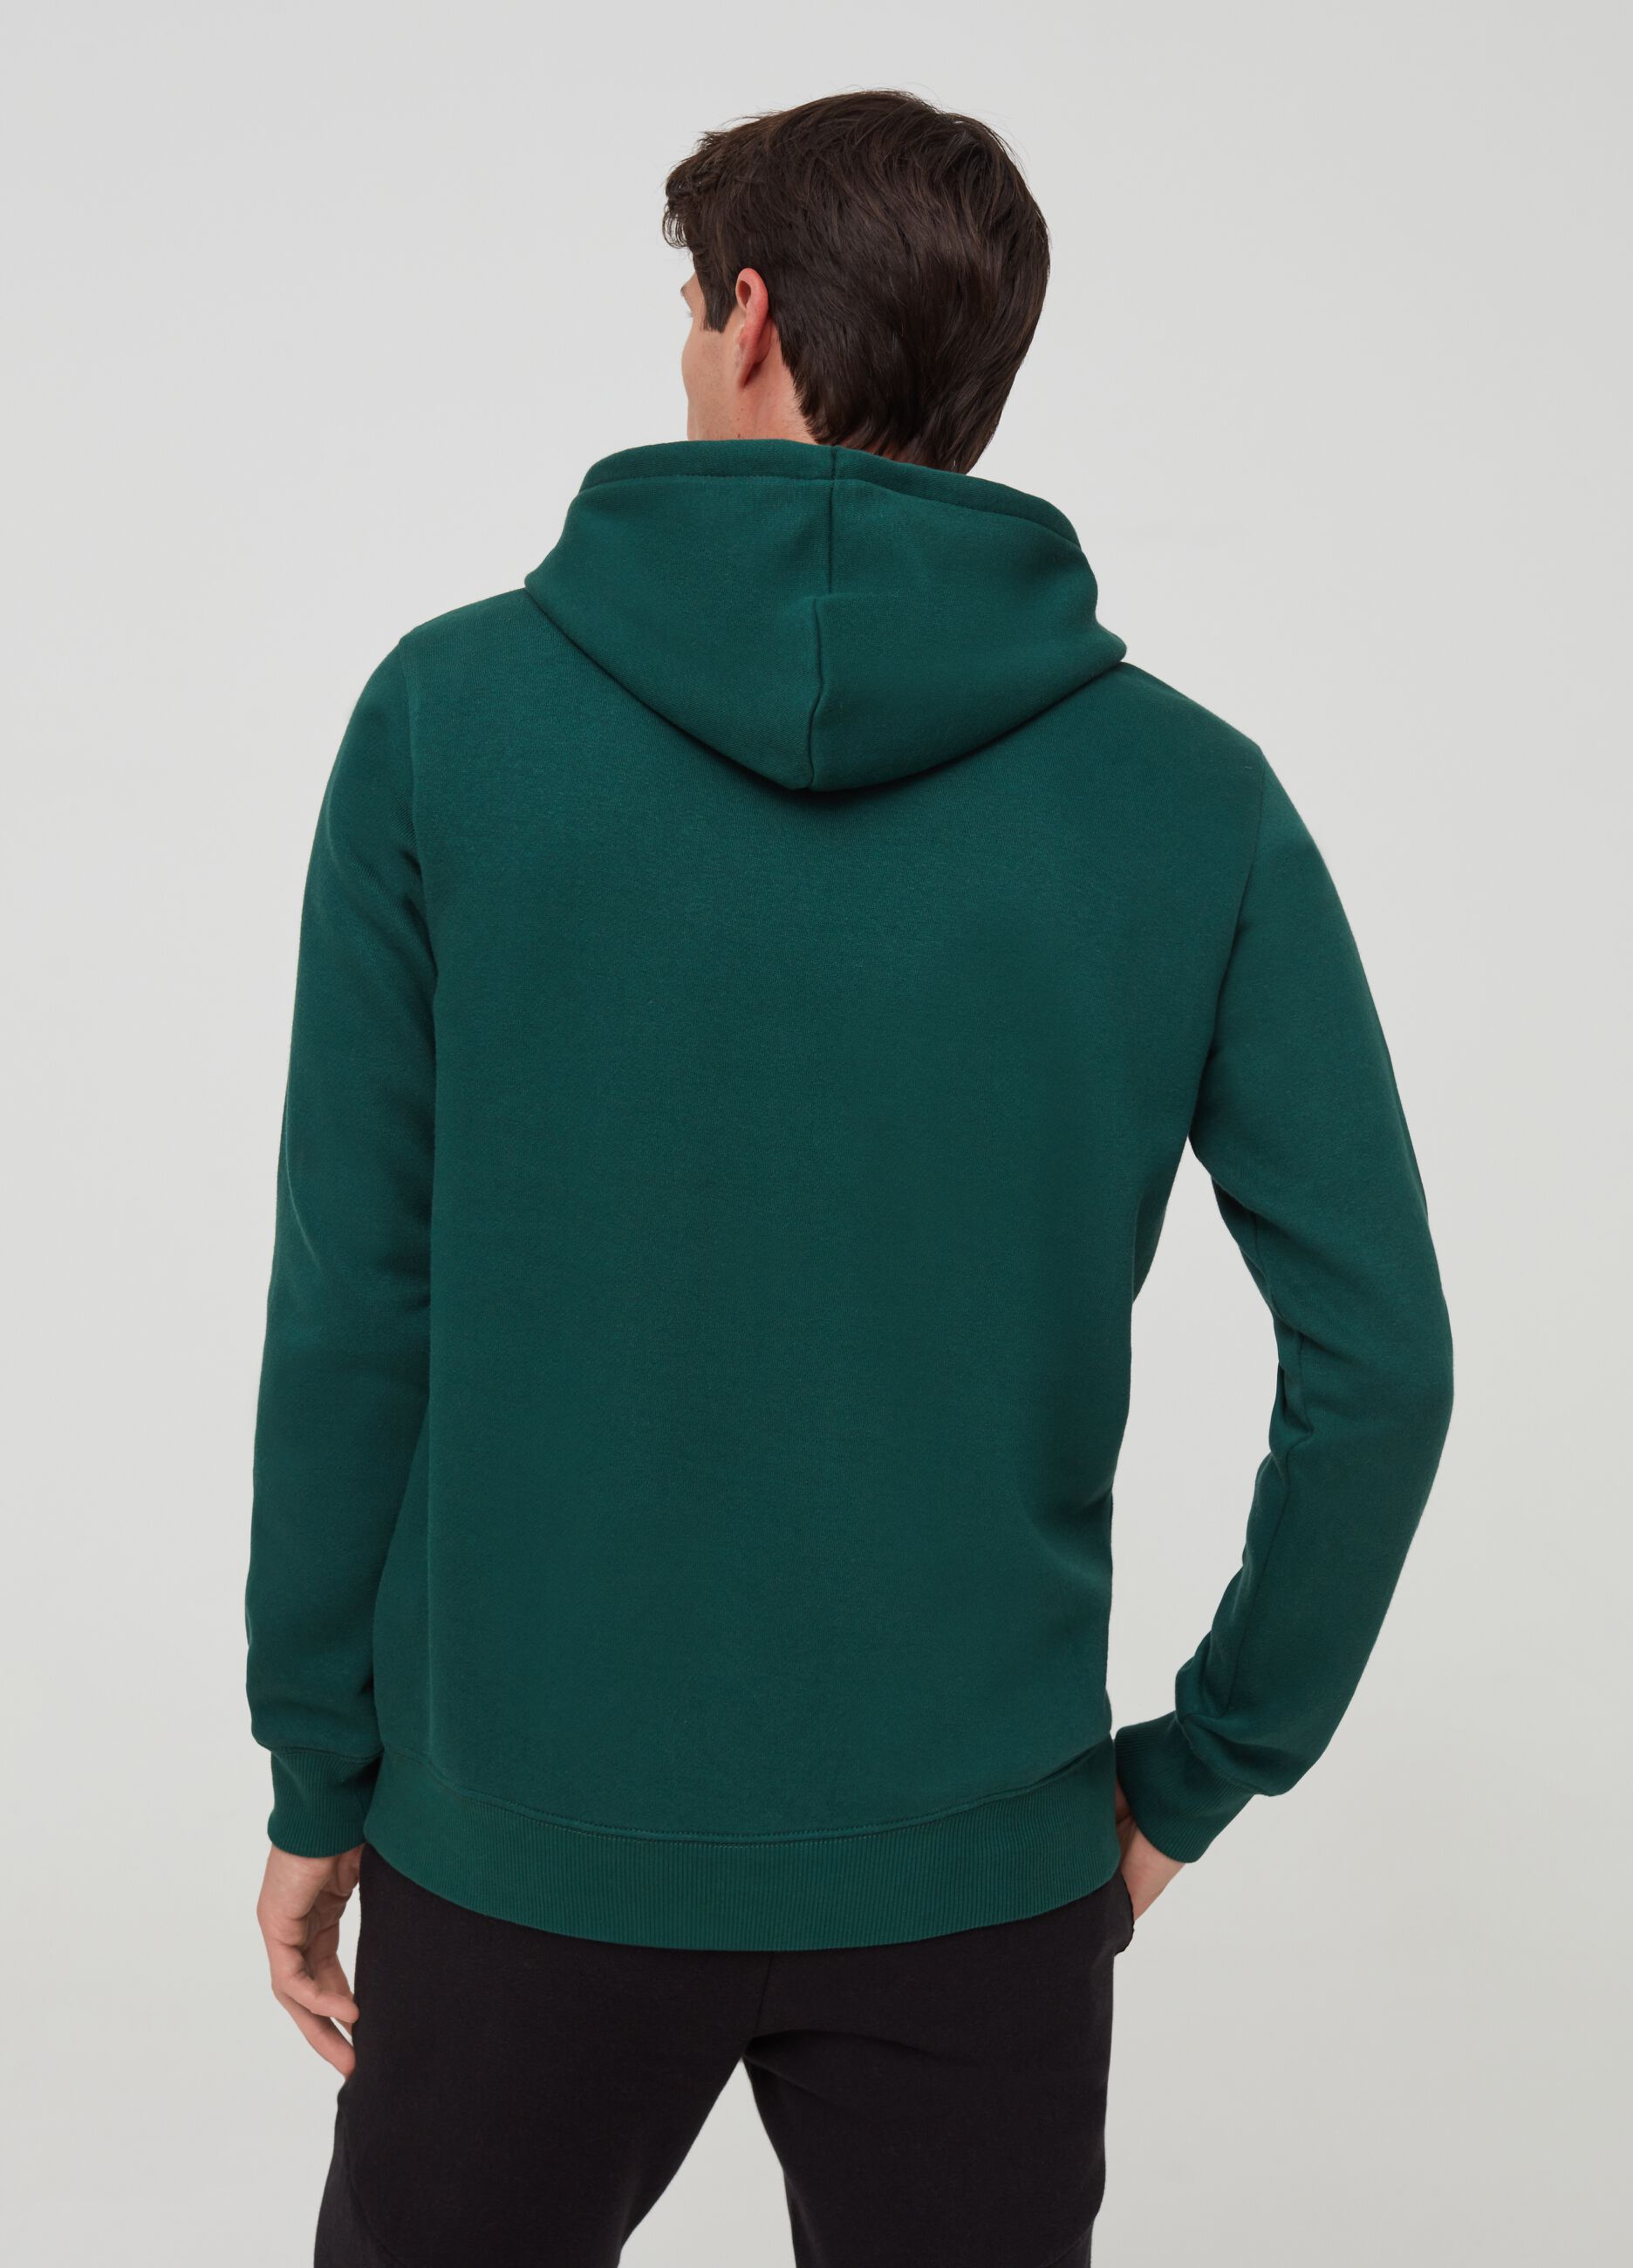 Sweatshirt with hood and Lotto print